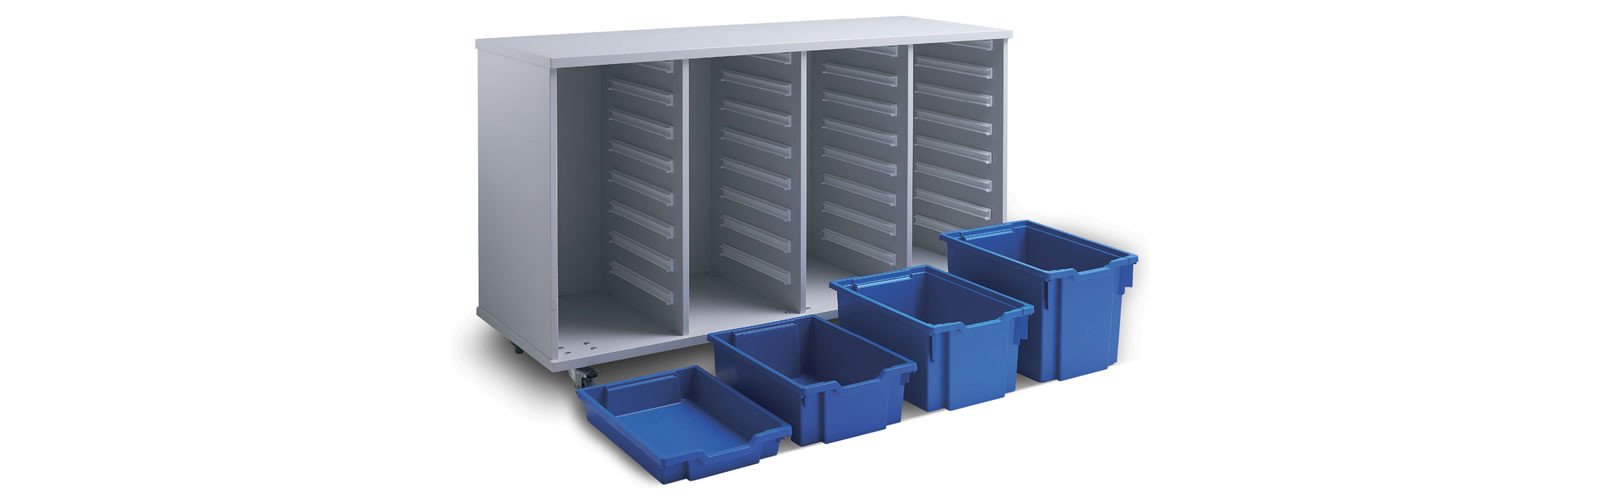 Classroom Storage Solutions